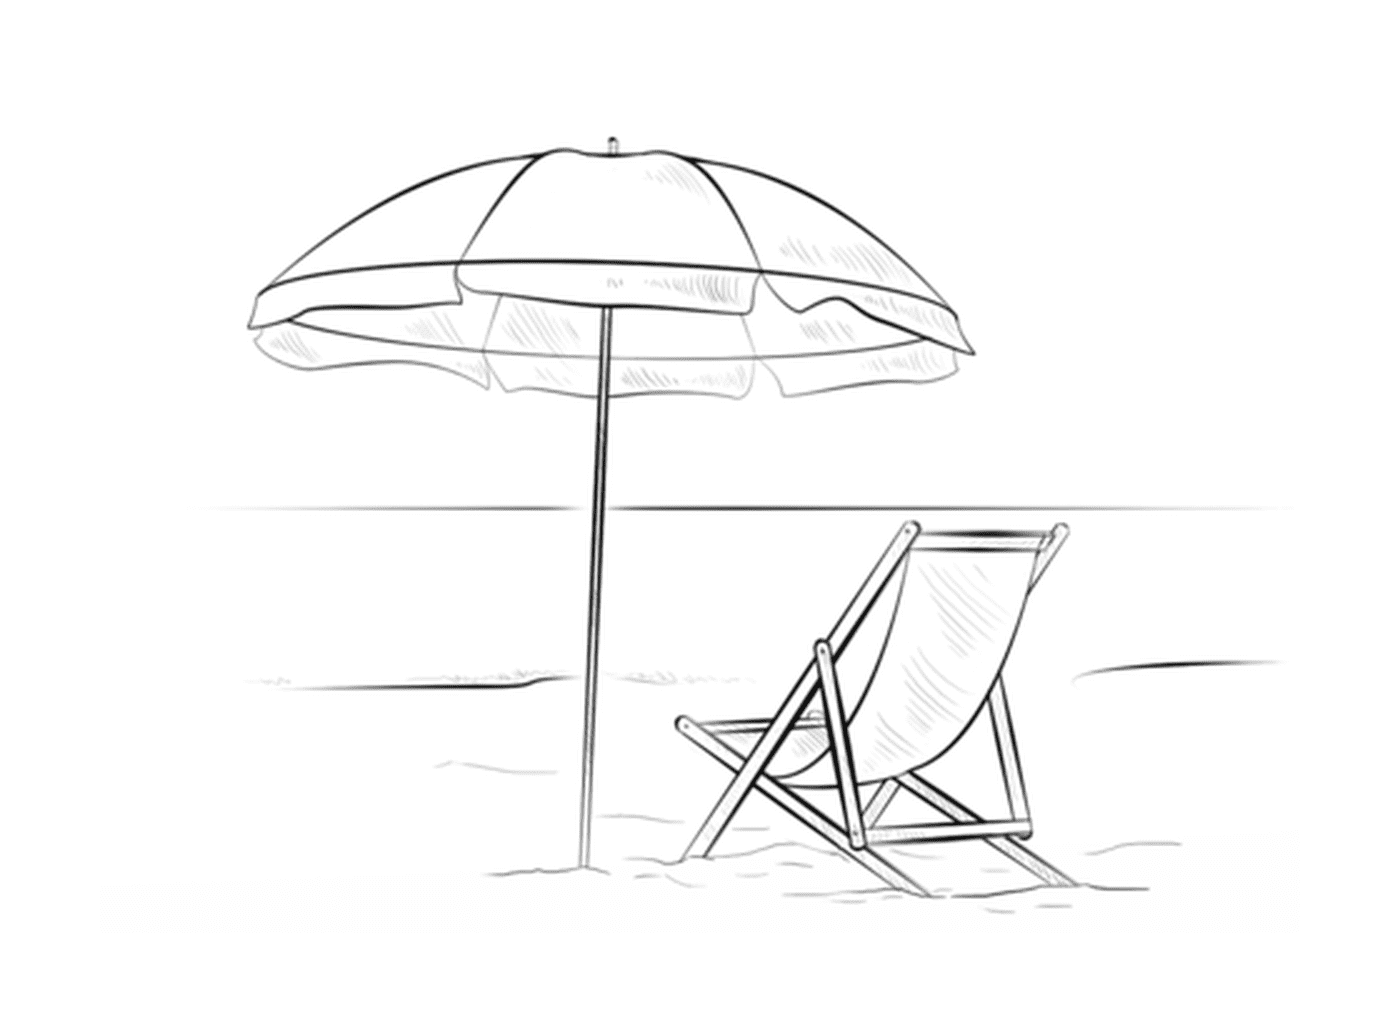  Un ombrellone con sedia a sdraio durante le vacanze estive 